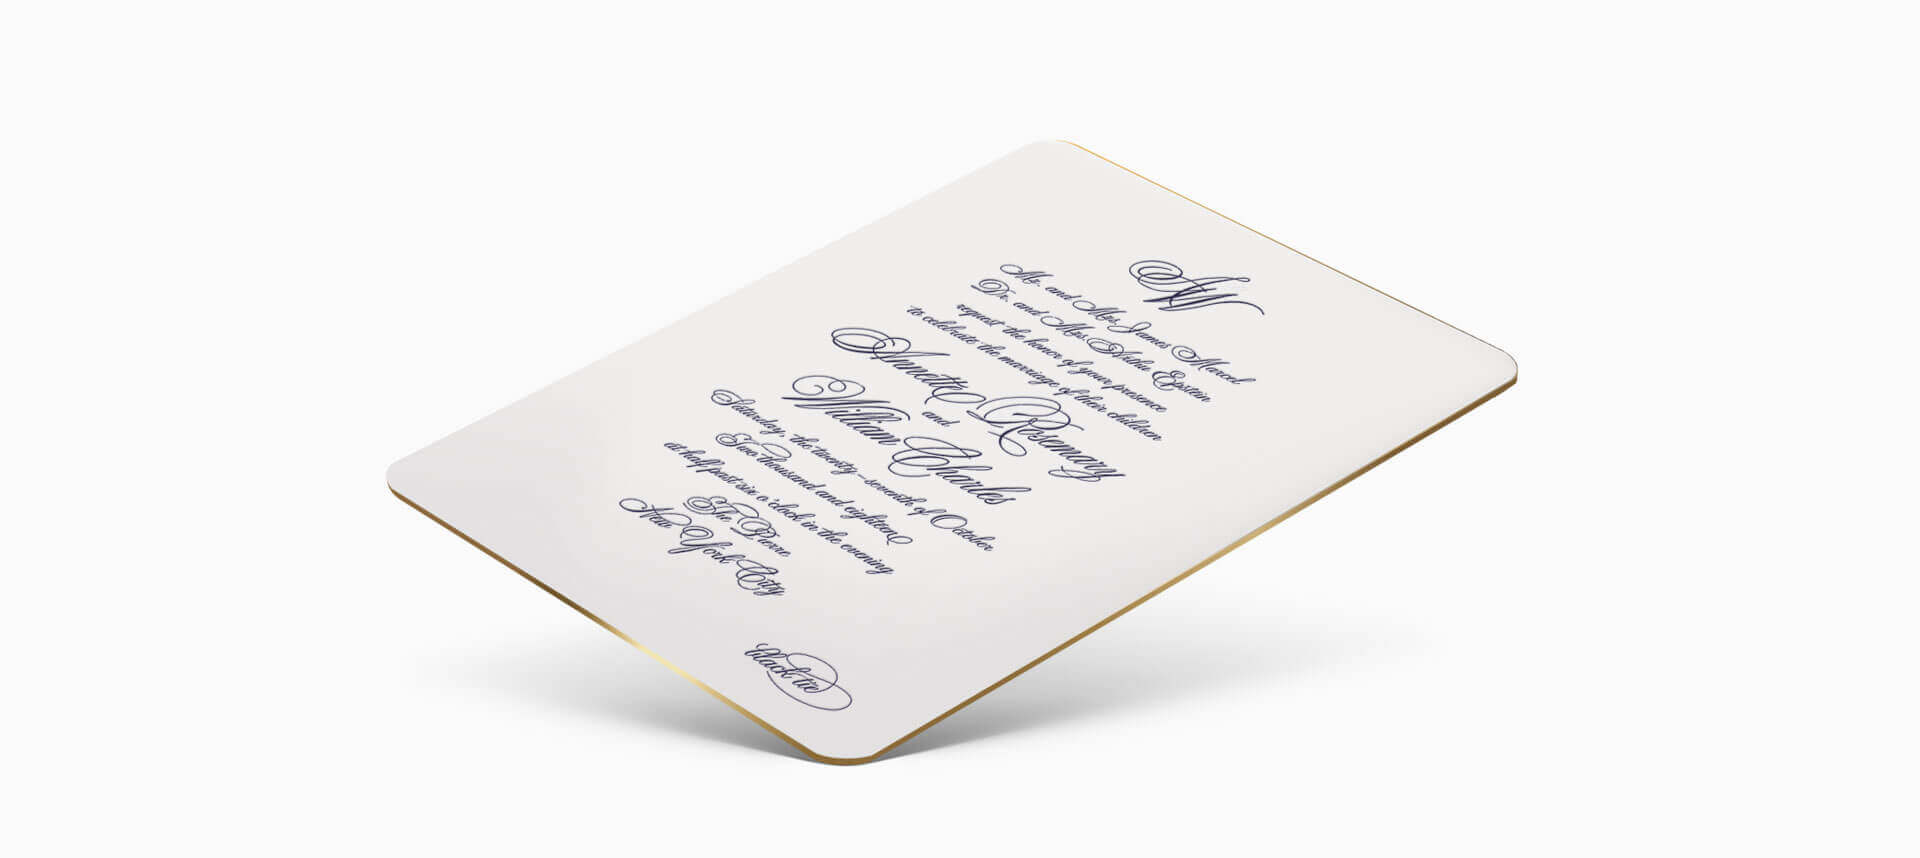 Classic wedding invitation with gold edges